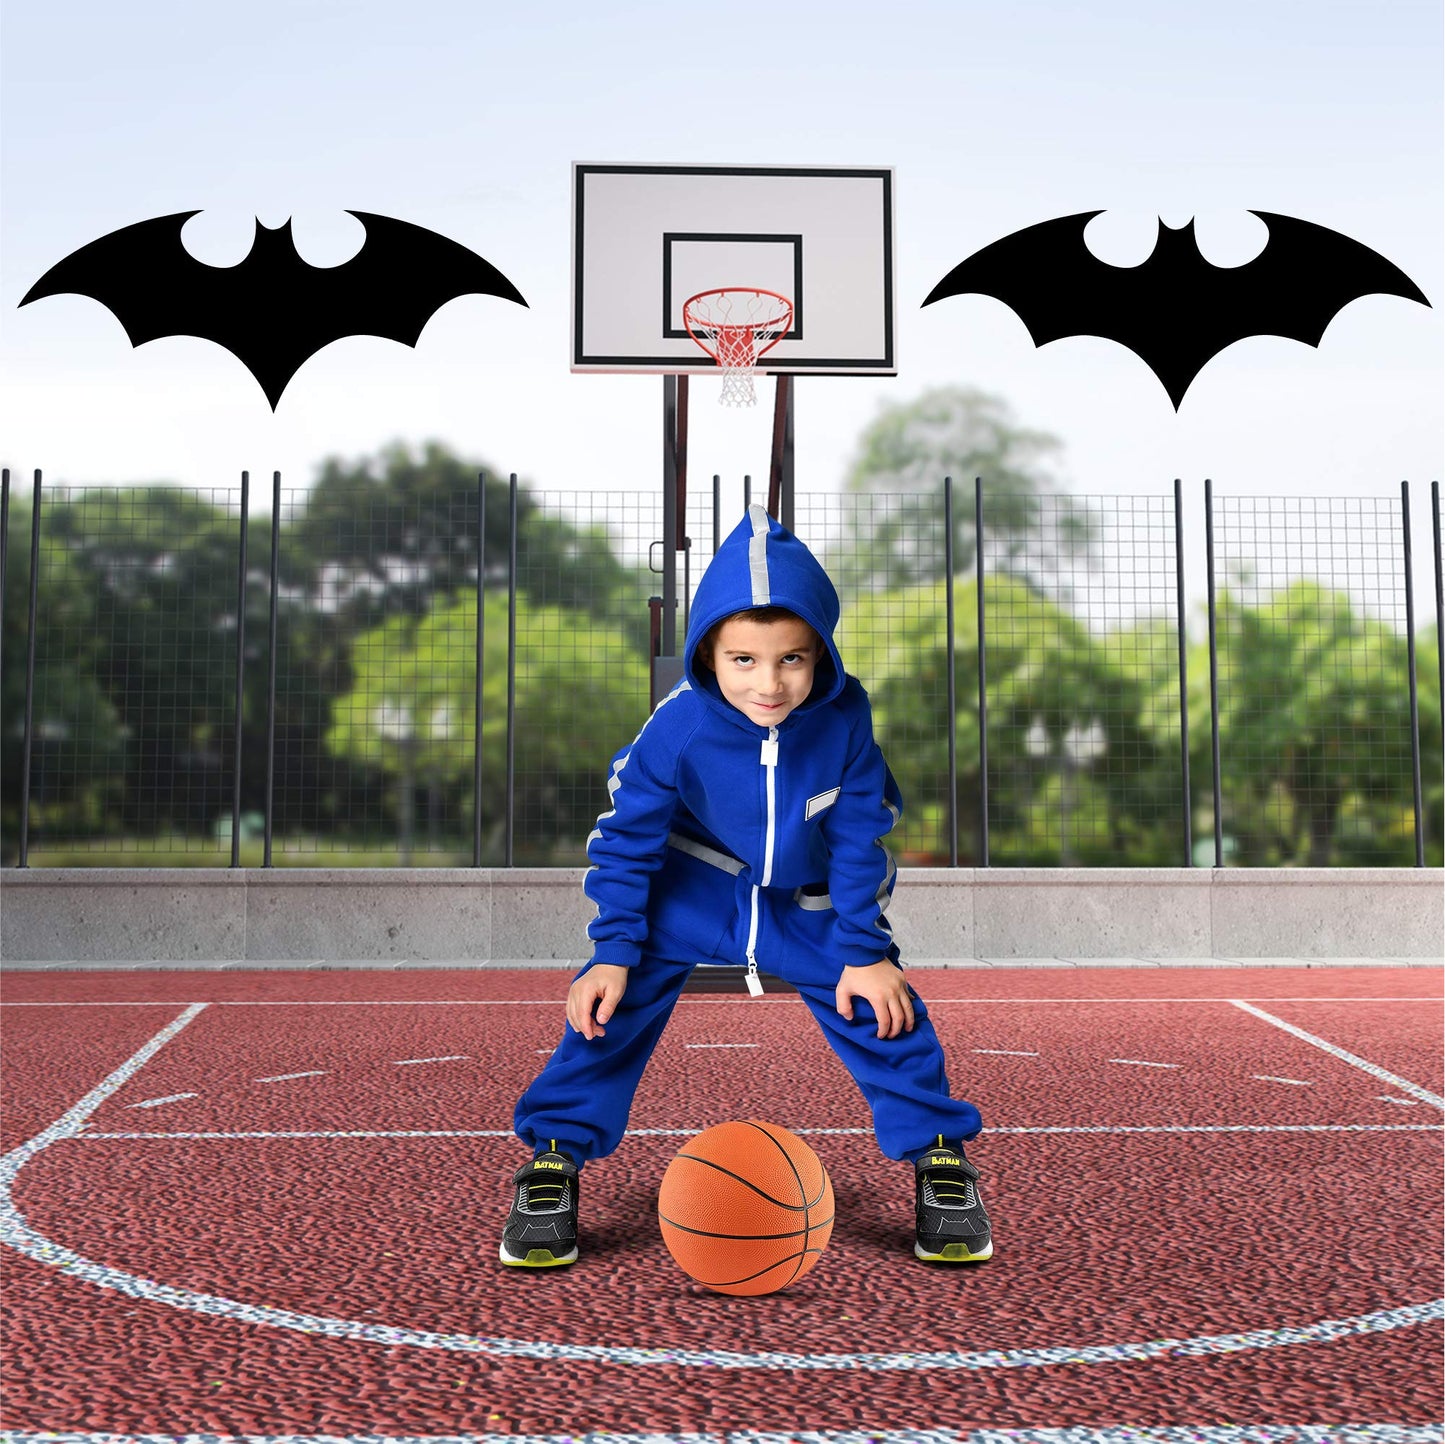 DC Comics Batman Boys Bat Signal Lighted Athletic Sneaker (Toddler/Little Kid)